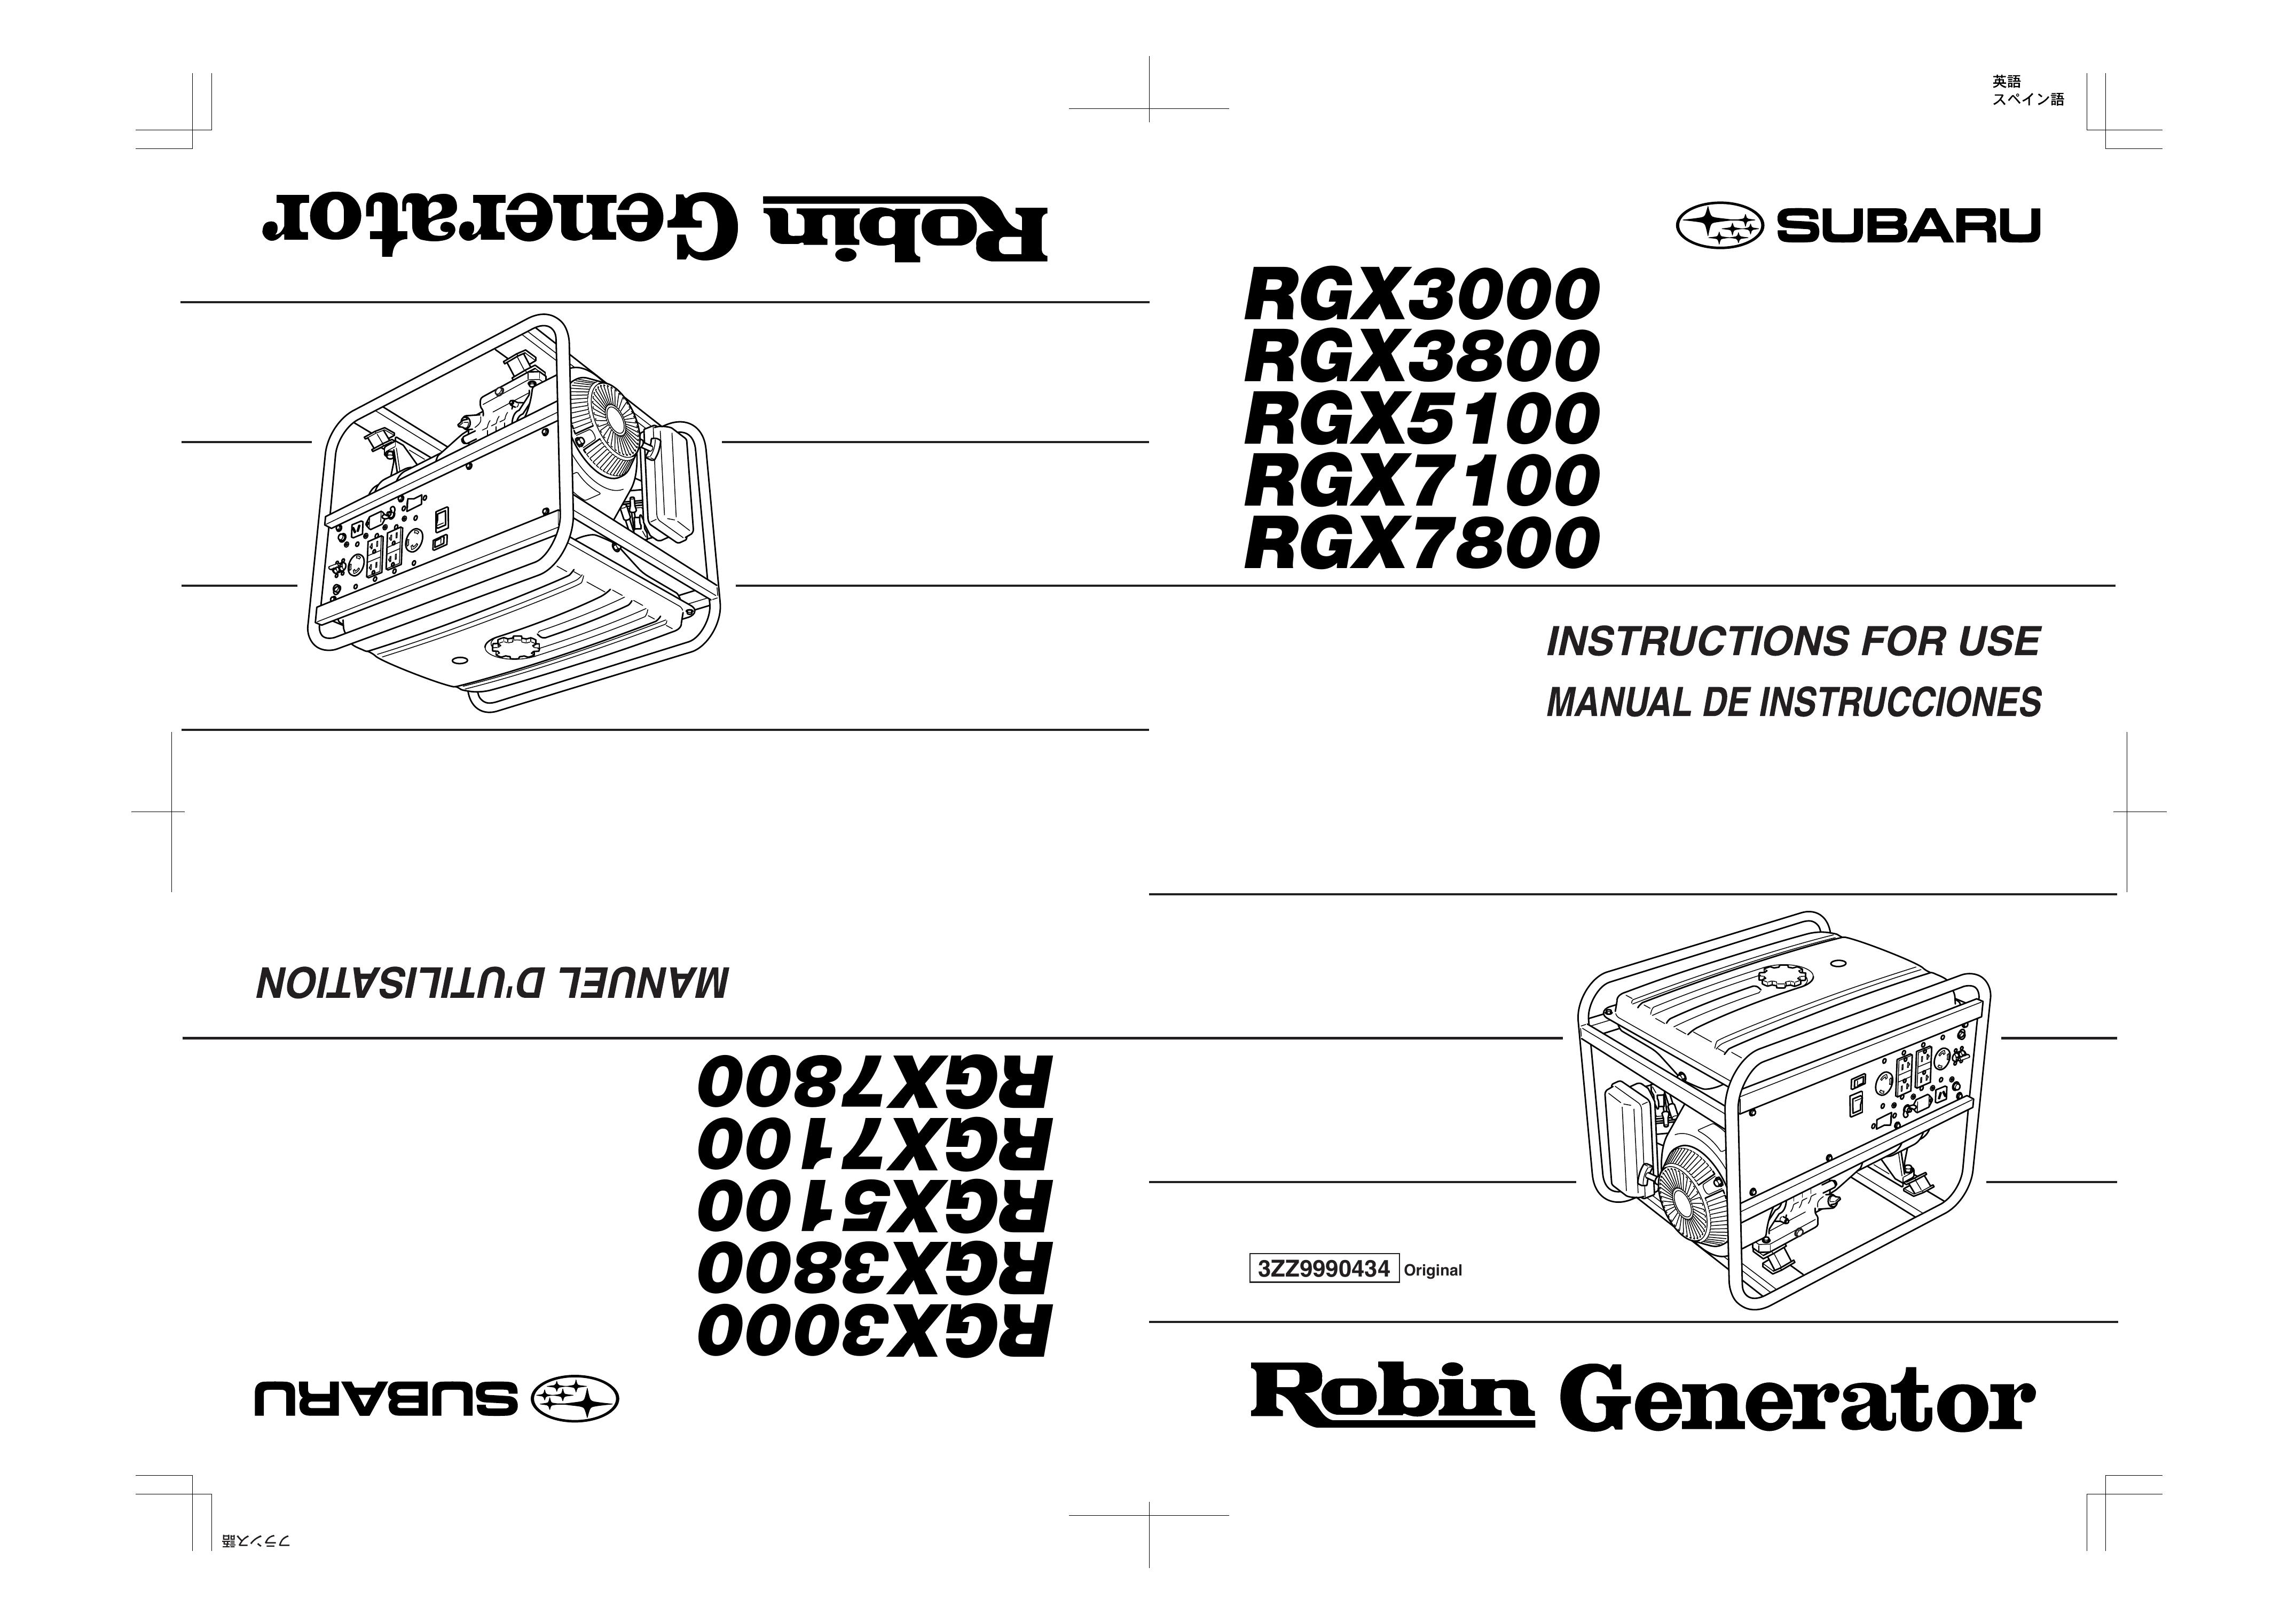 Subaru RGX3000 Portable Generator User Manual